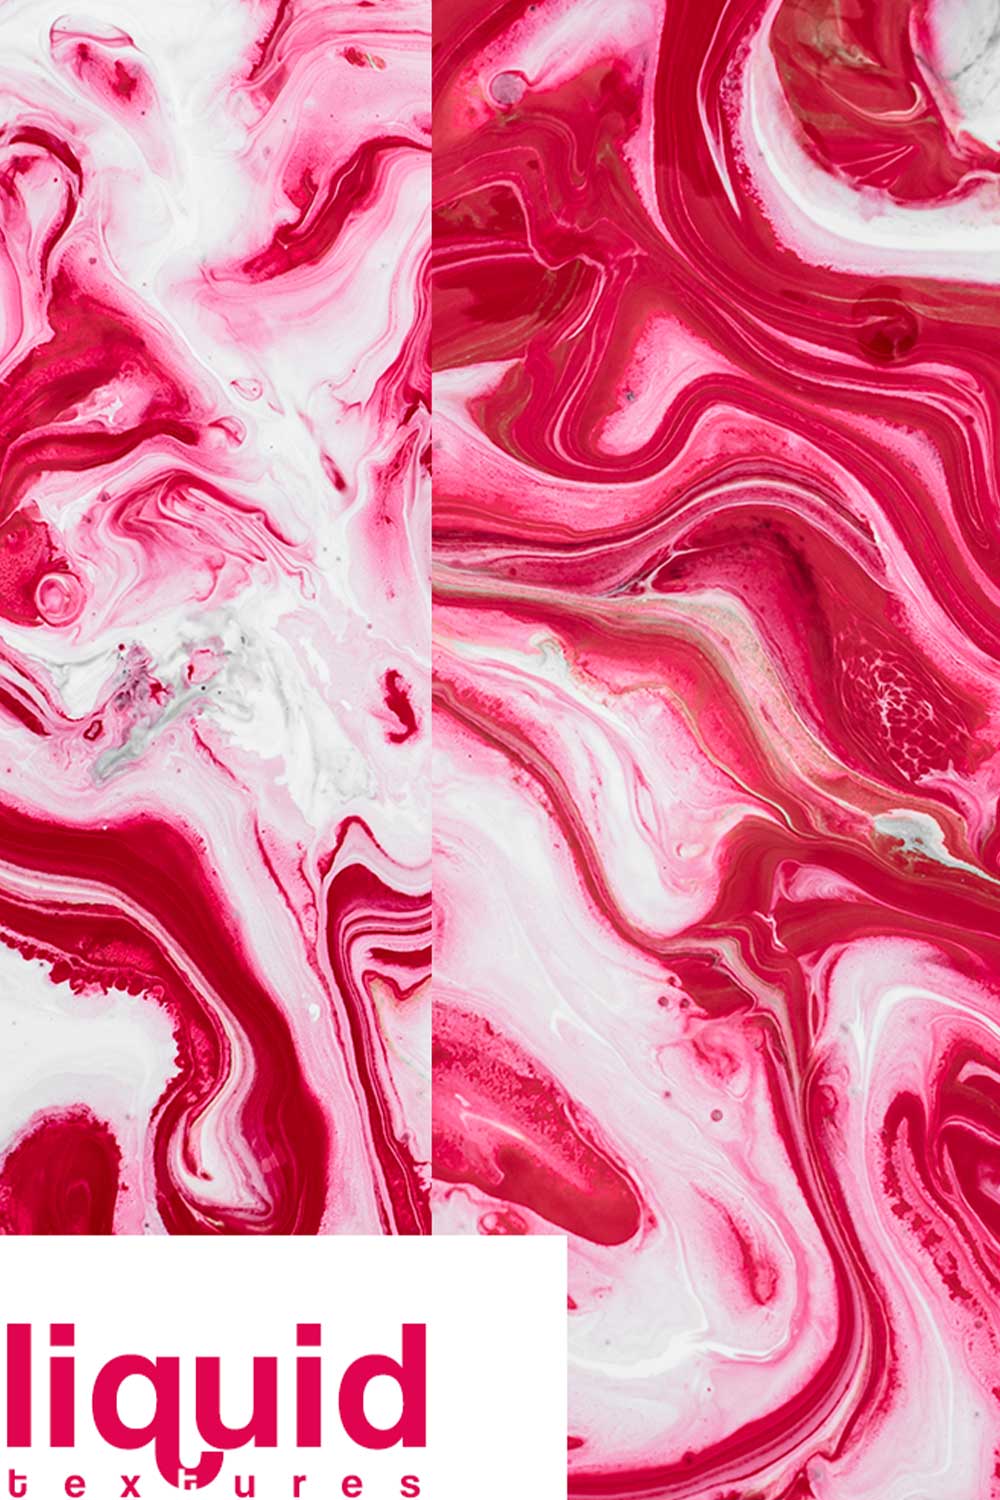 Liquid Marble Background Textures Pinterest Image.